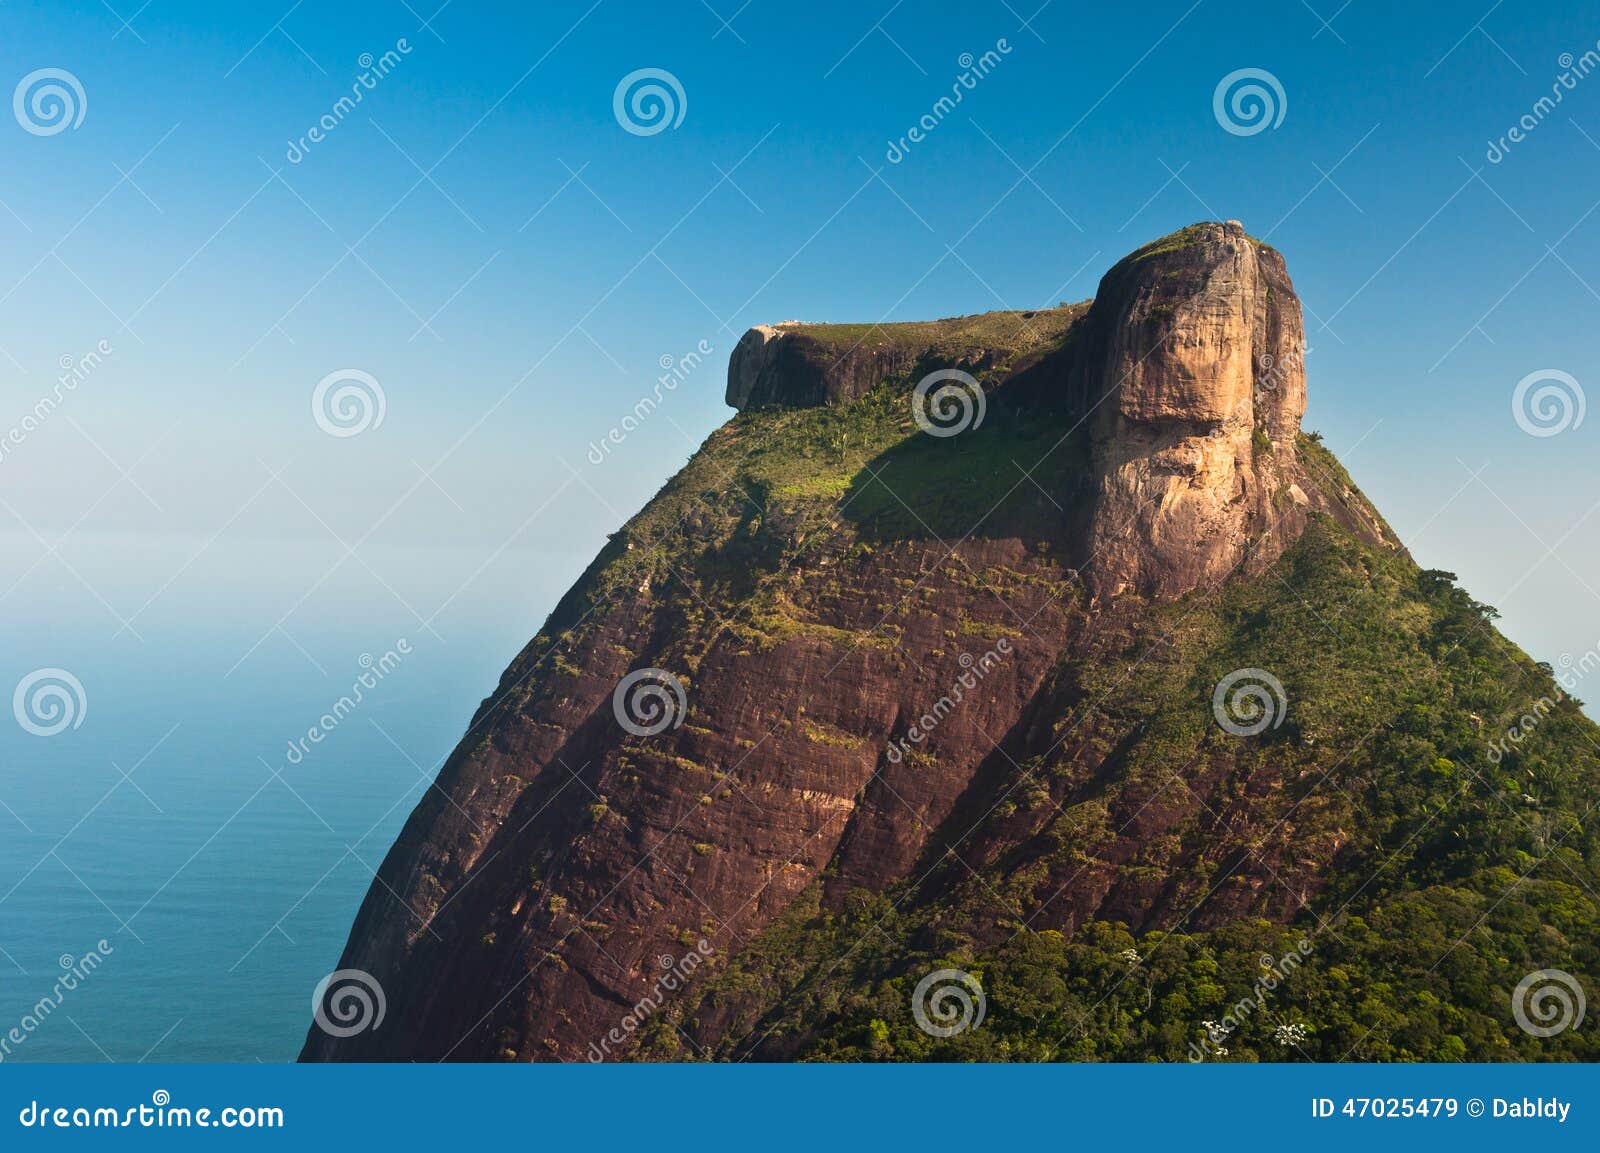 Pedra Da Gavea Rock Stock Image Image Of Mountain Rock 47025479